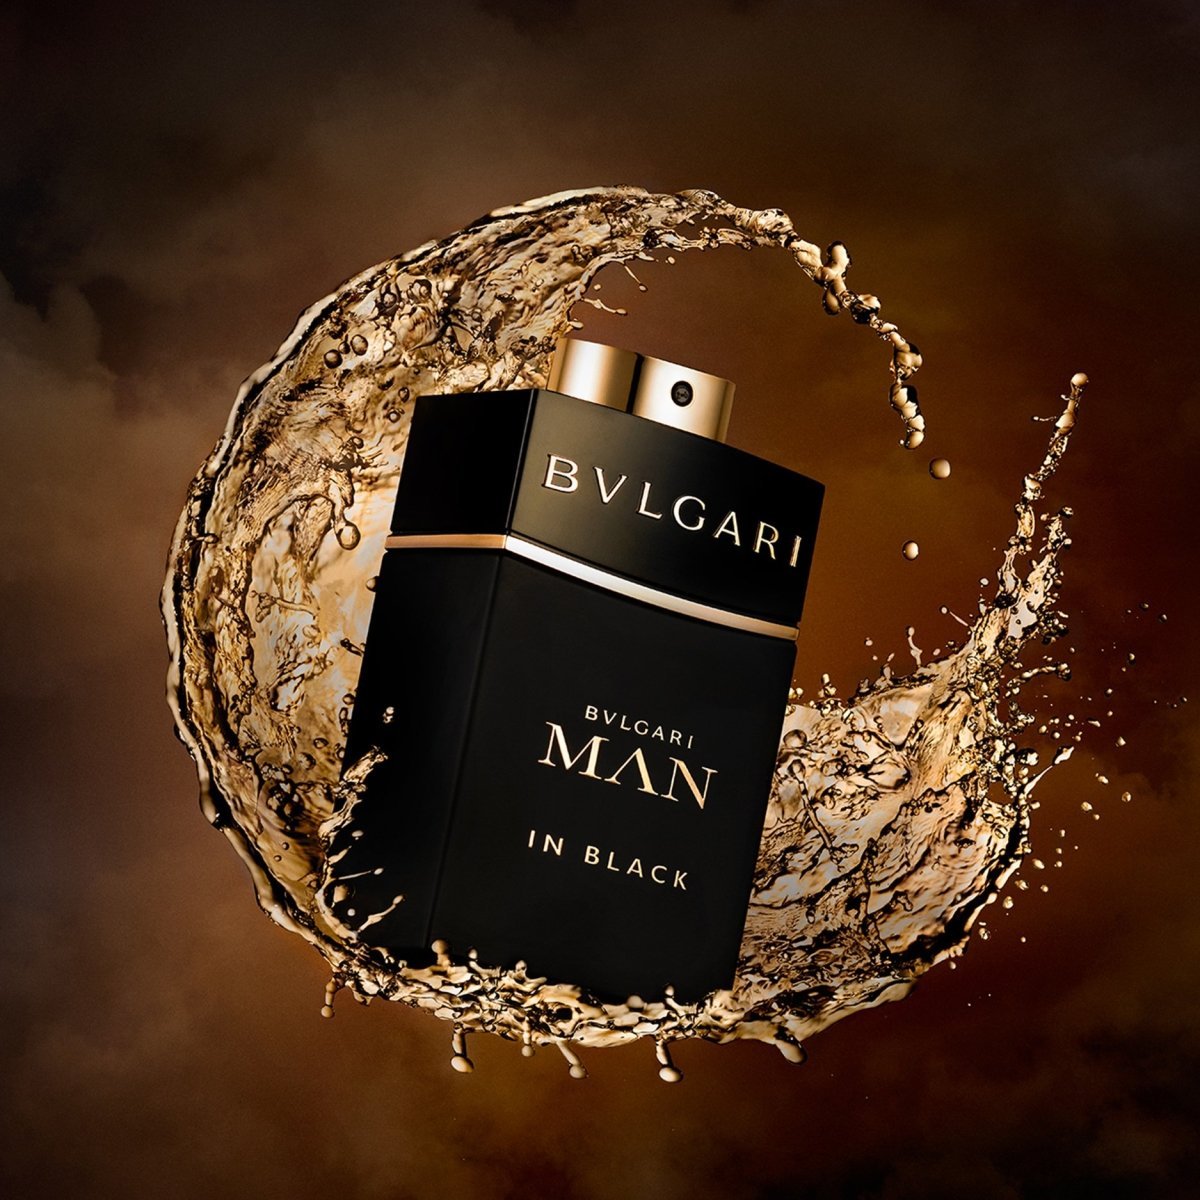 Bvlgari Man In Black Aftershave Balm - My Perfume Shop Australia